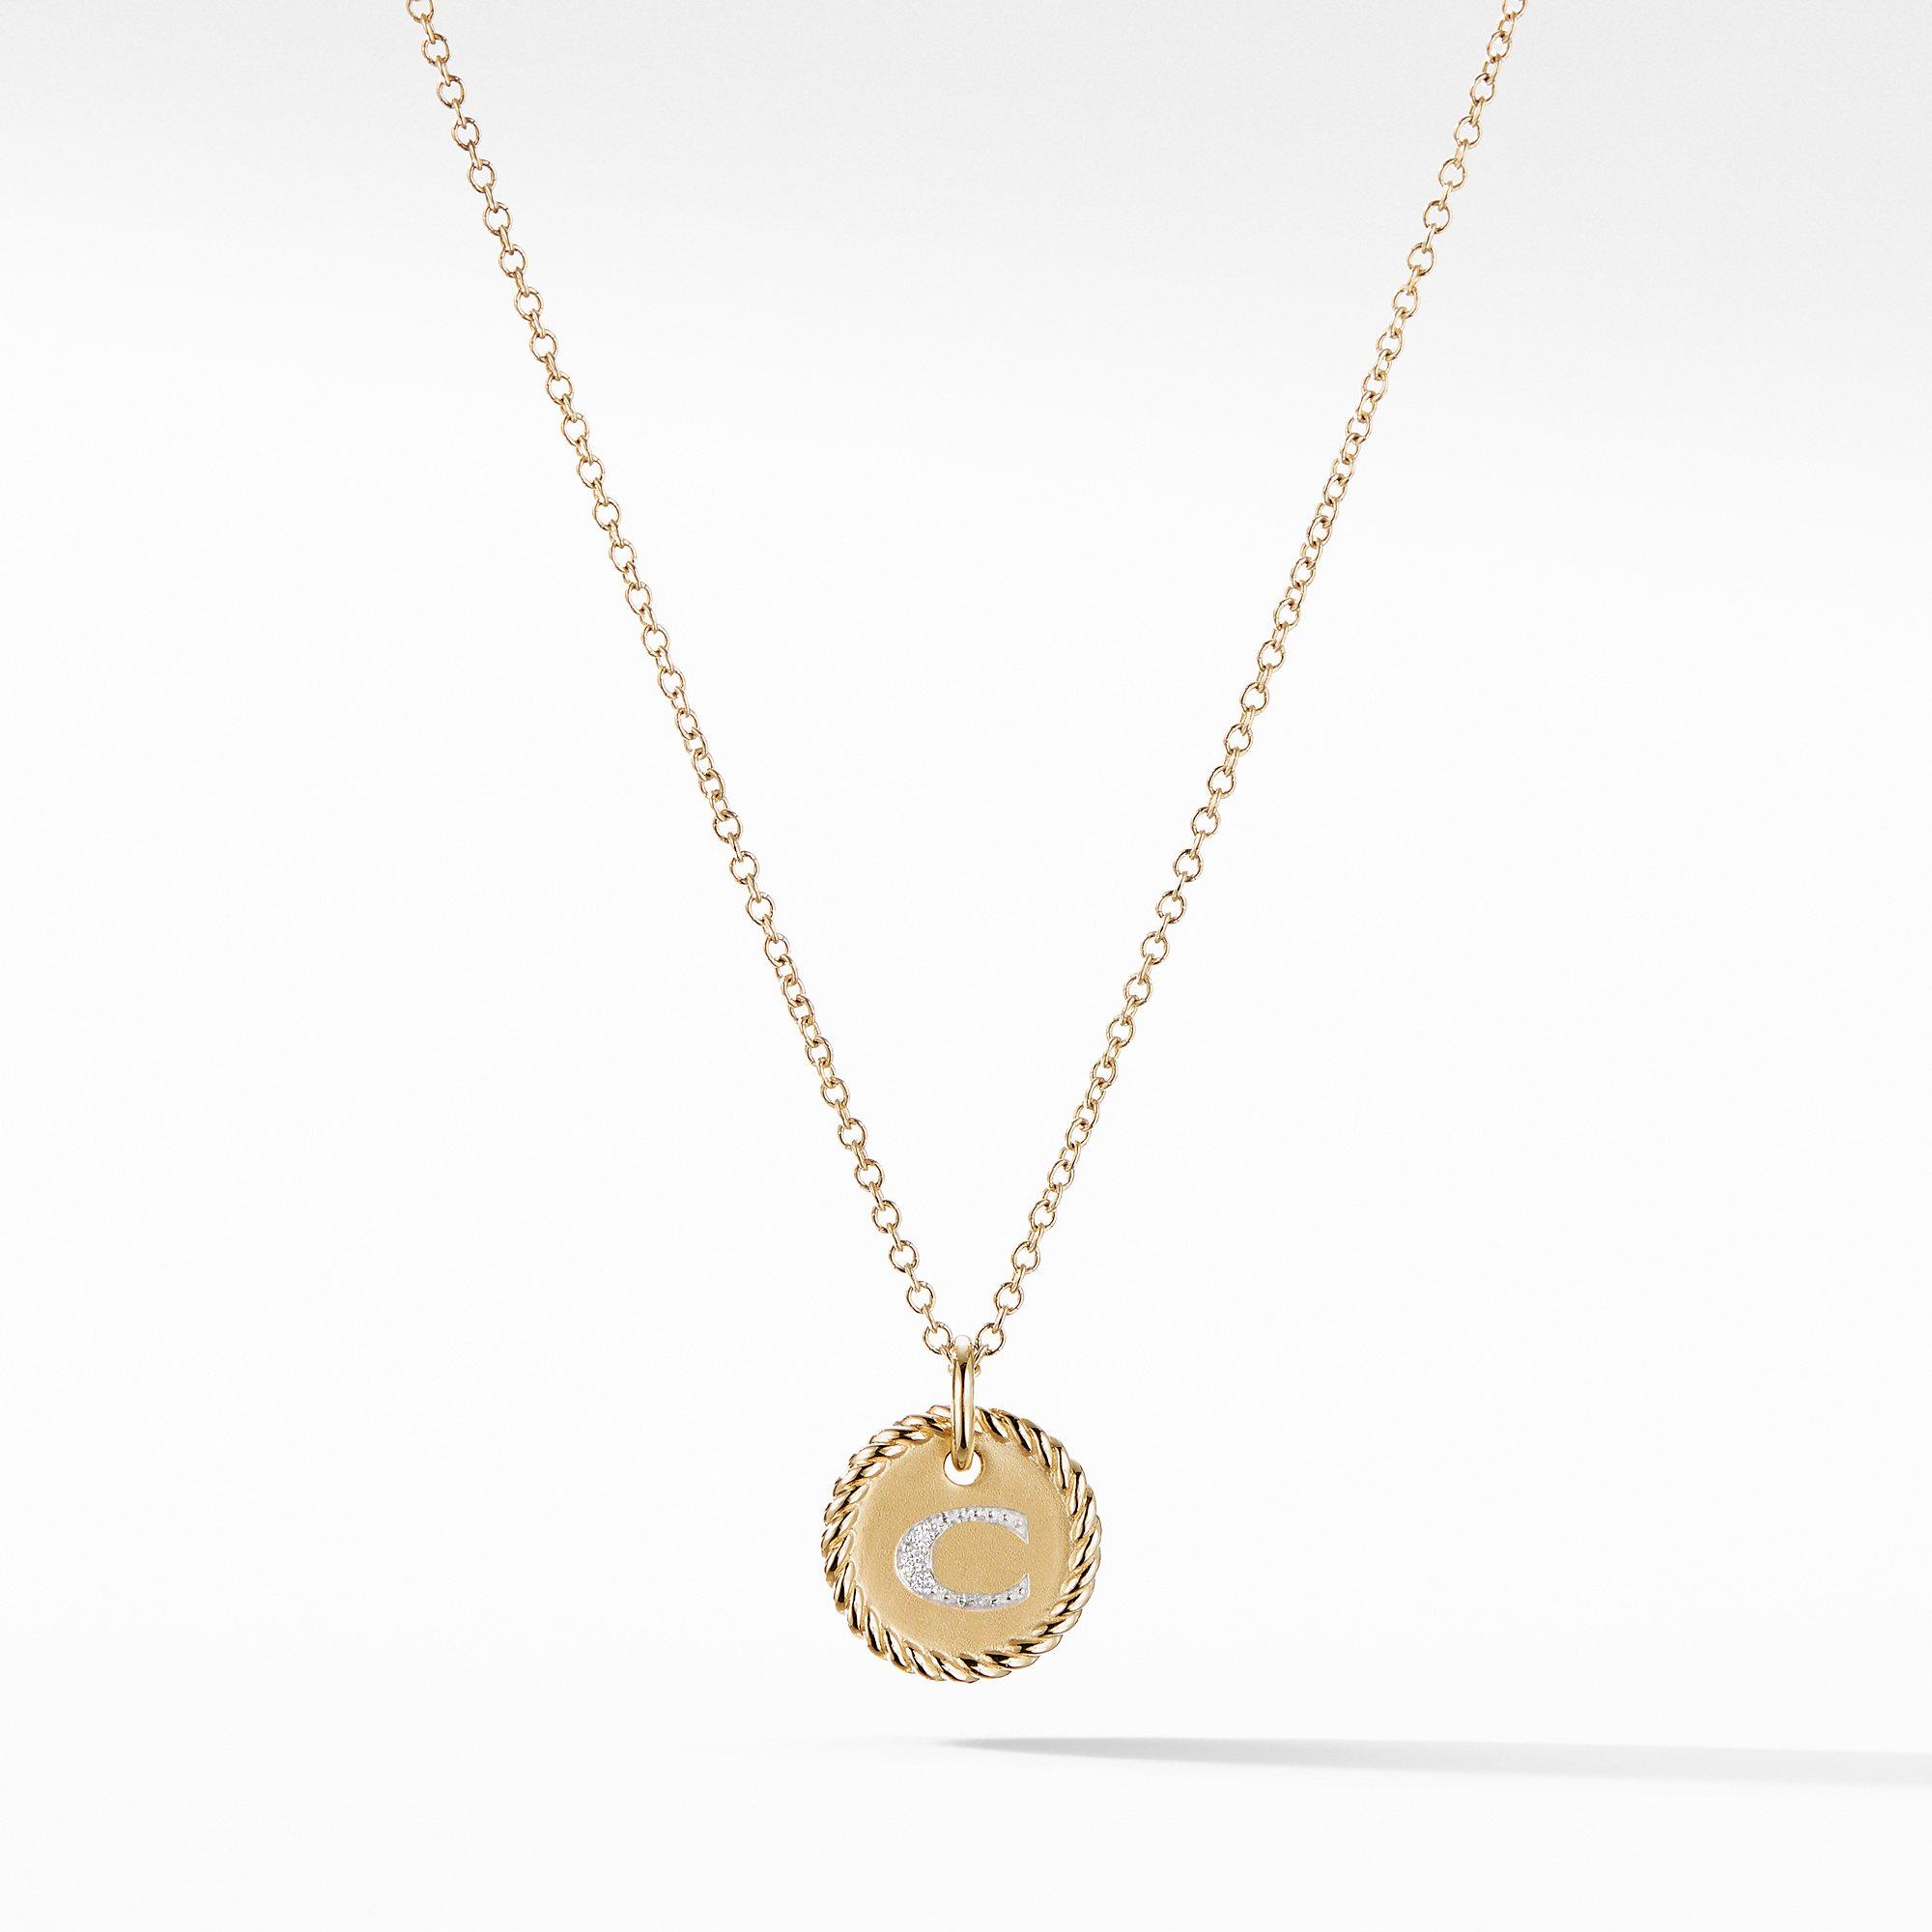 David Yurman C Initial Charm Necklace in 18k Yellow Gold with Diamonds